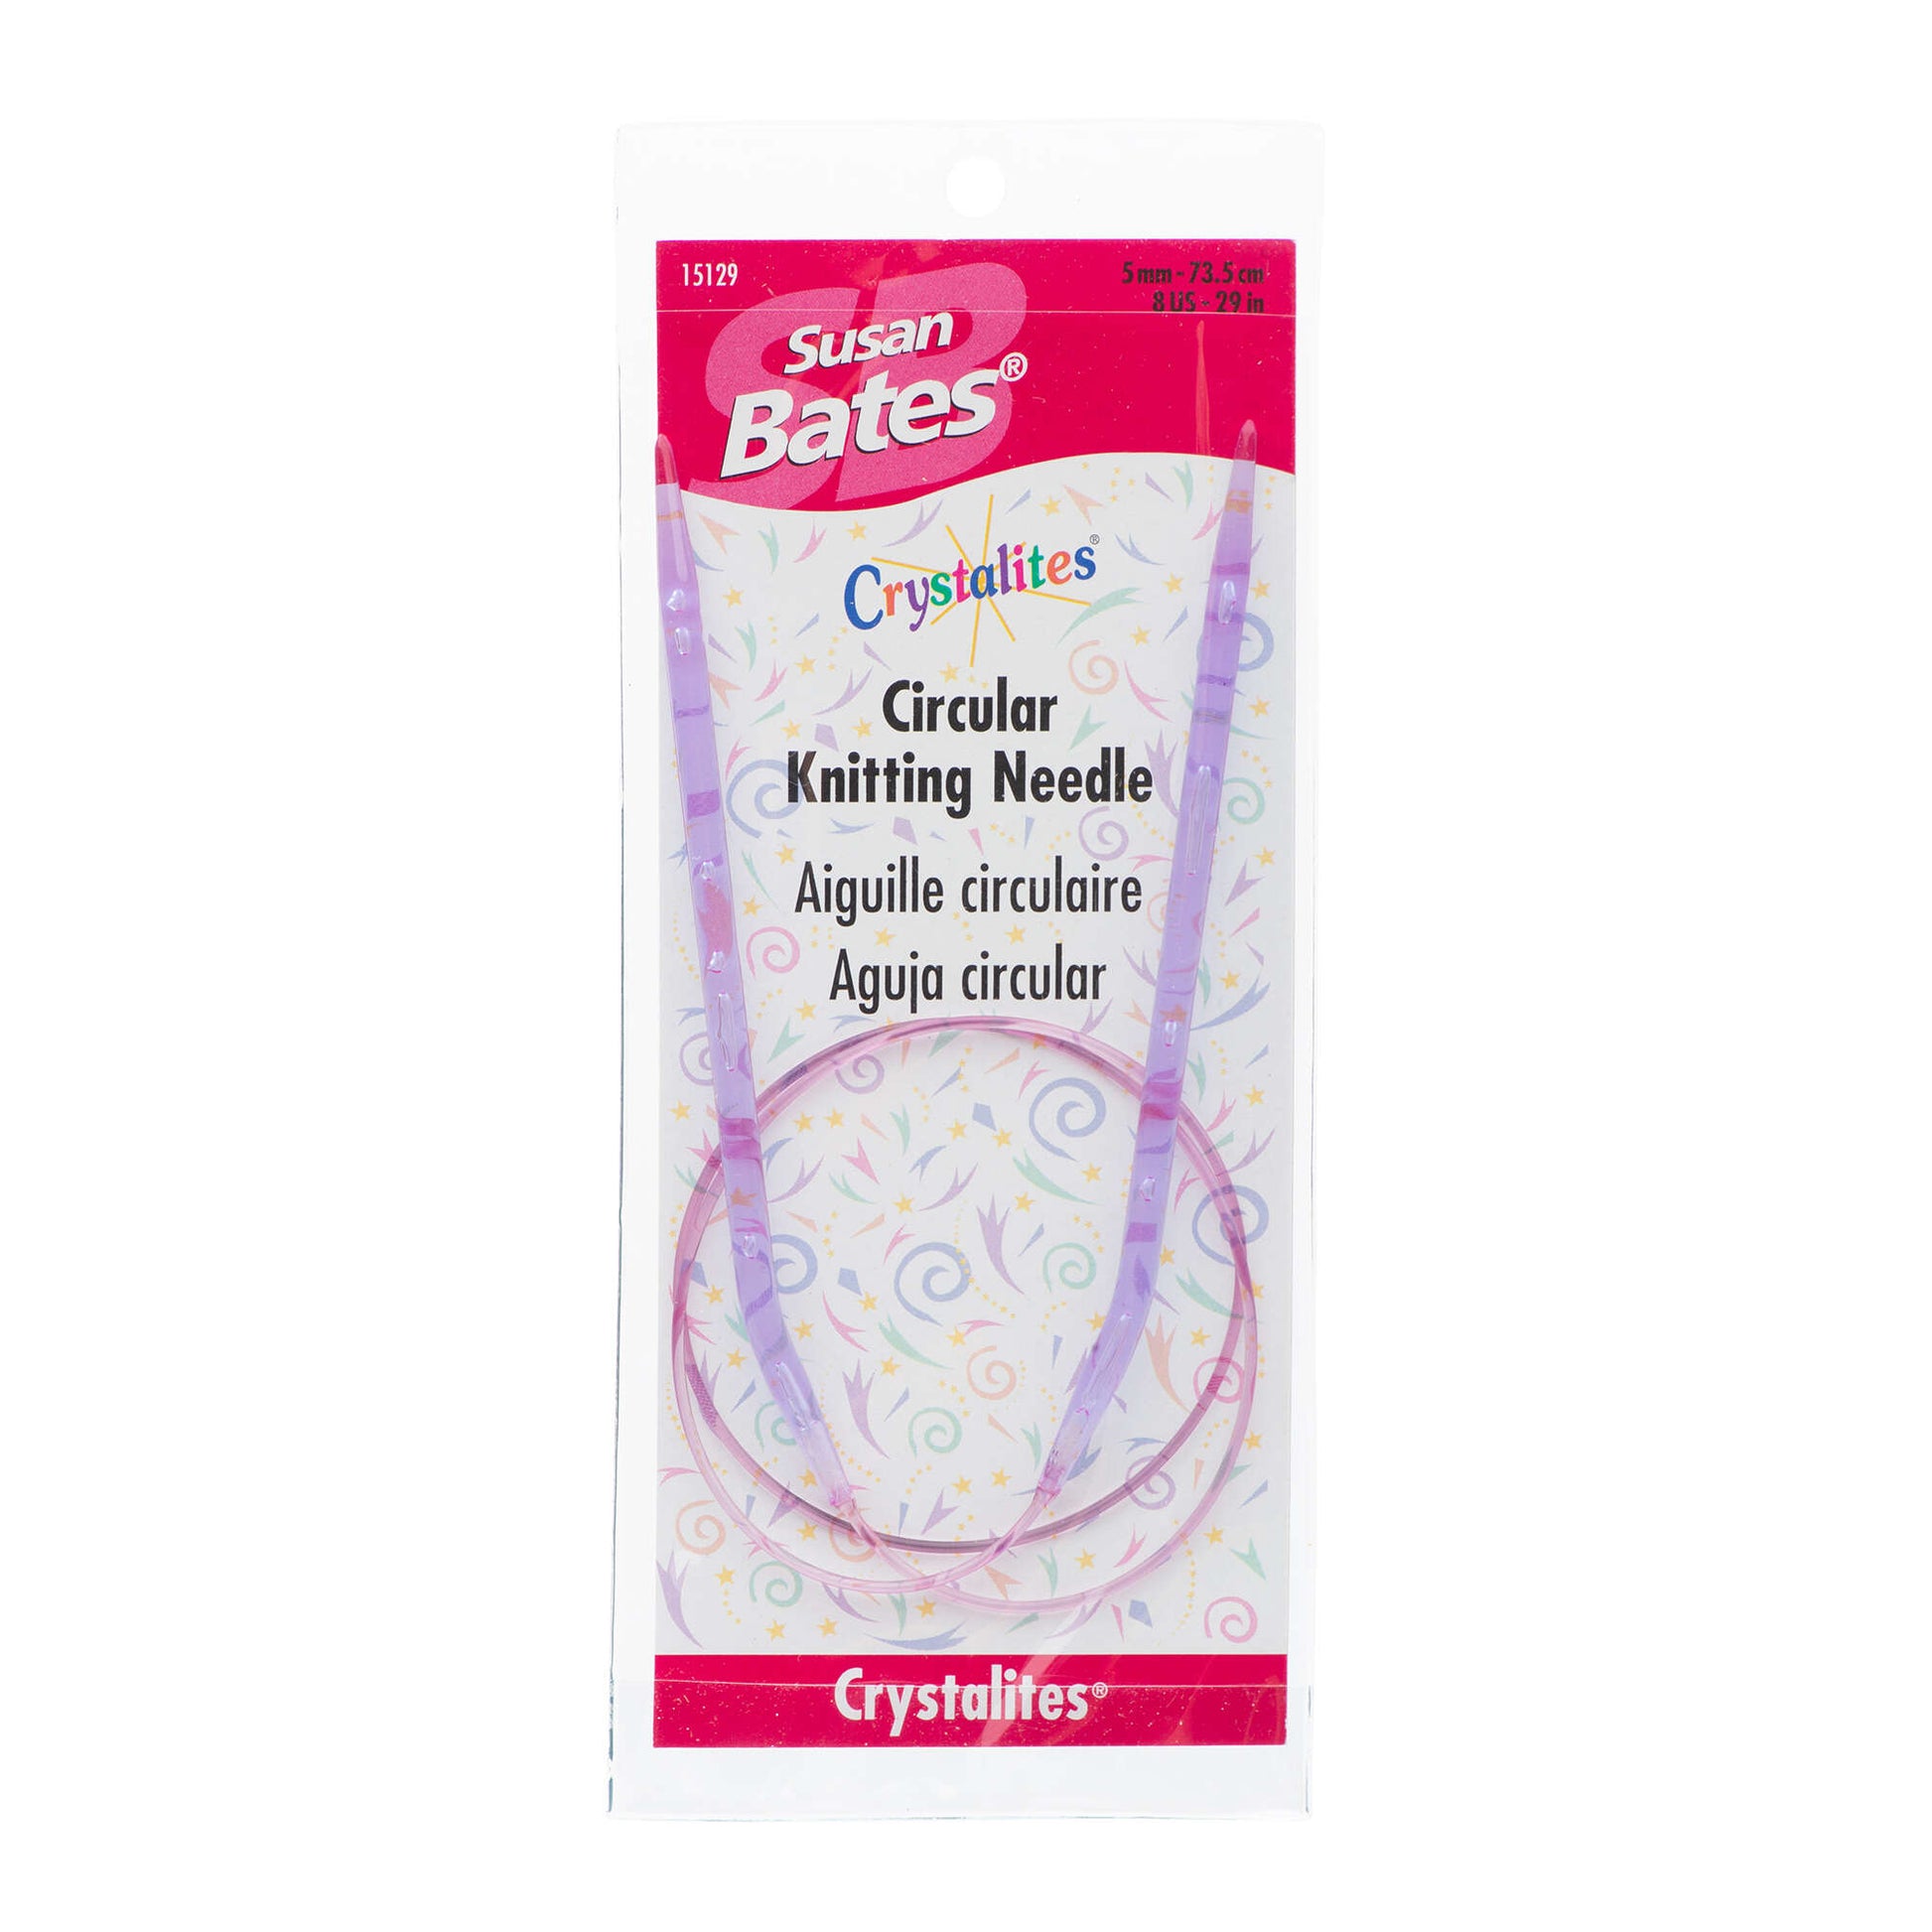 Susan Bates Crystalites 29 Circular Knitting Needles